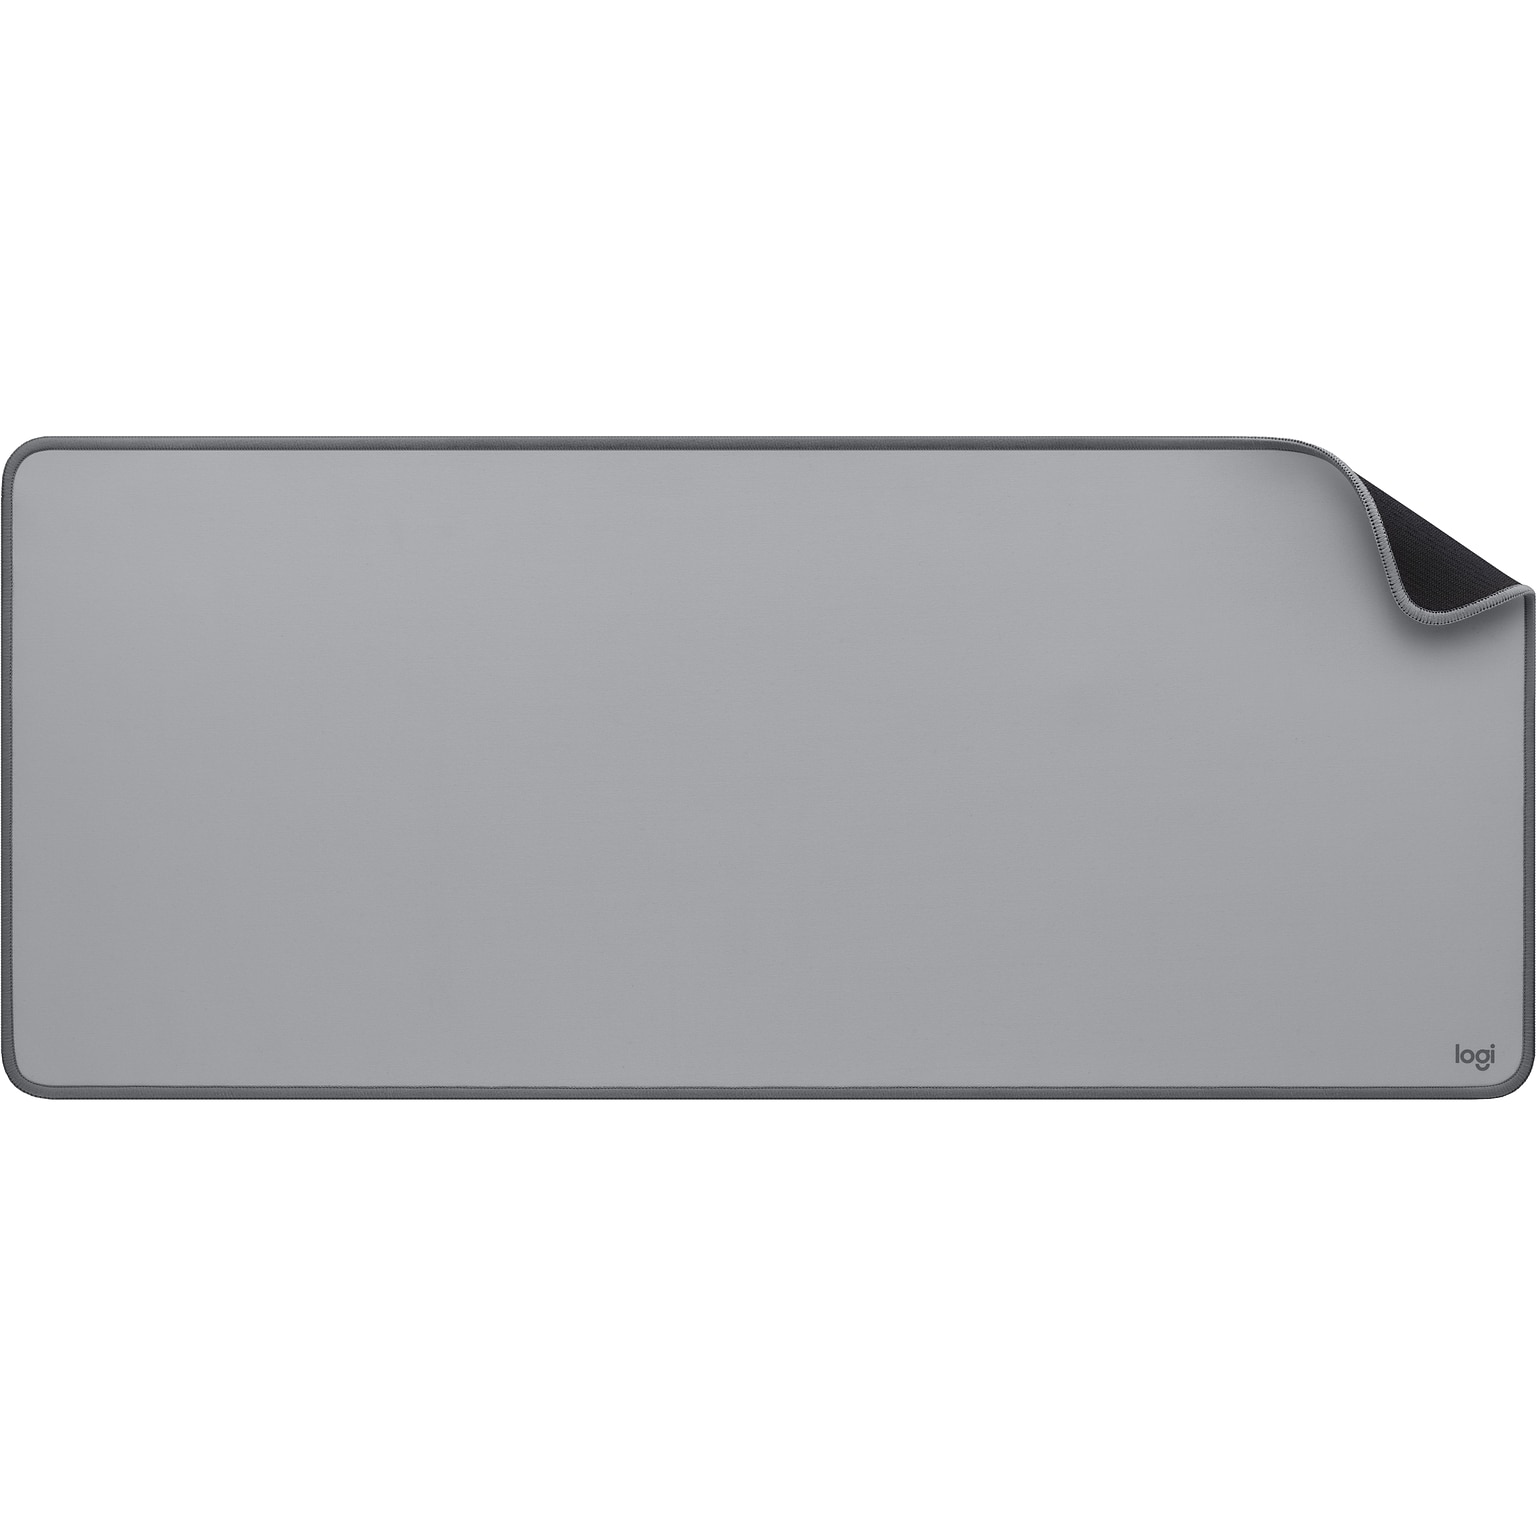 Logitech Studio Non-Skid Mouse Pad, Mid Gray (956-000047)